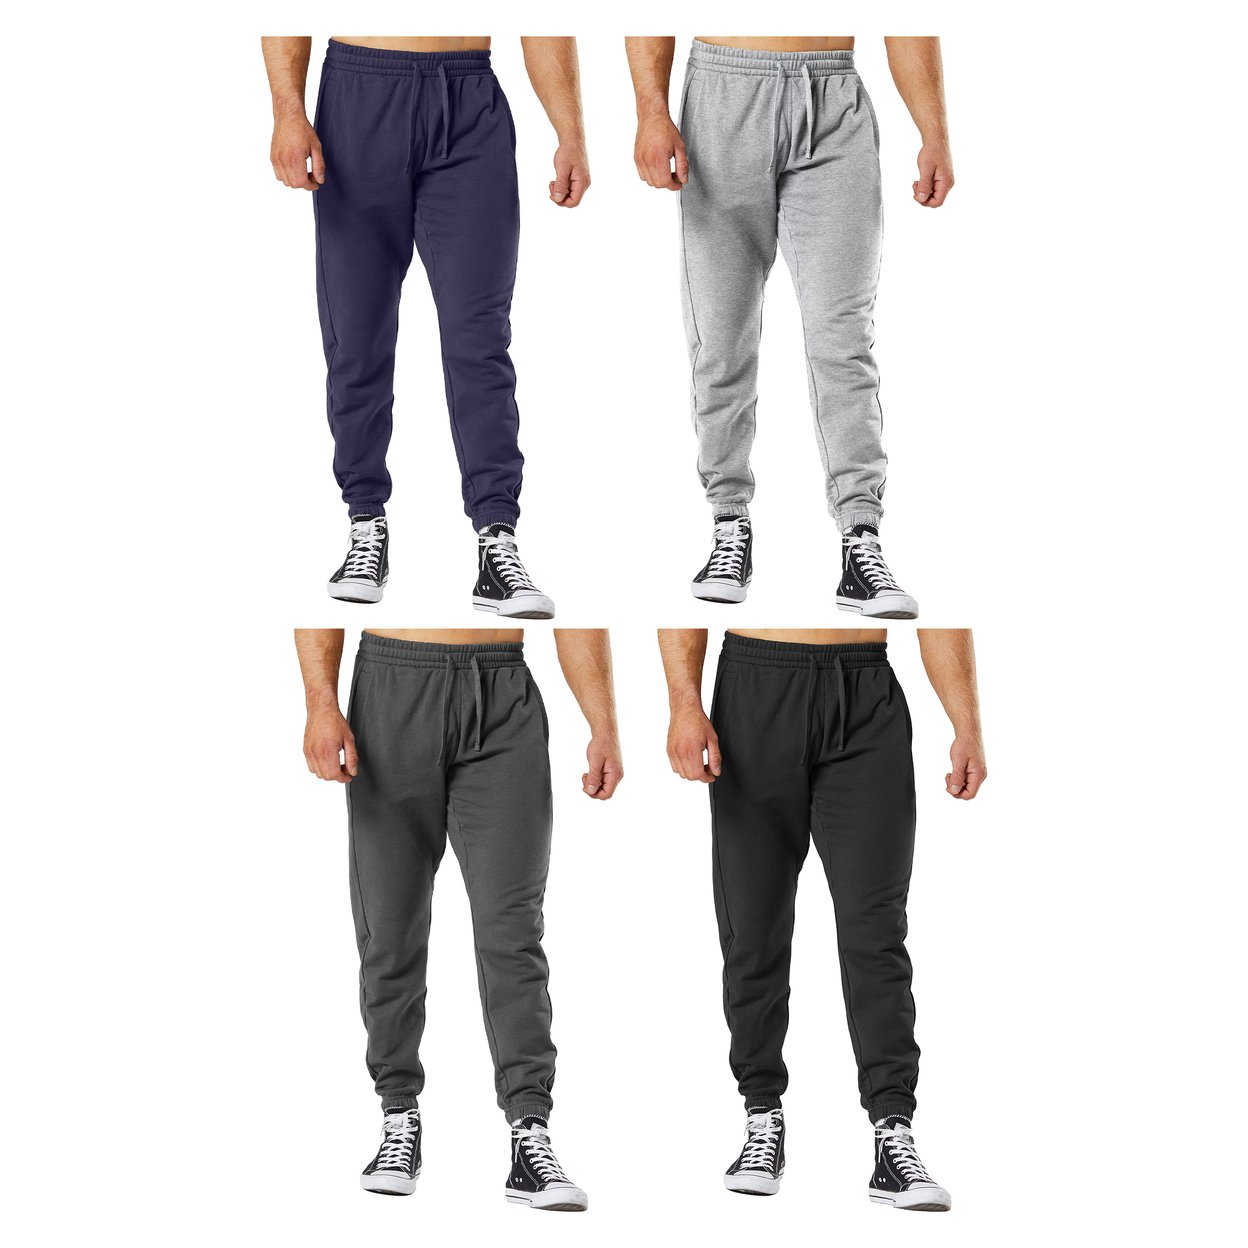 2-Pack: Men's Ultra-Soft Cozy Winter Warm Casual Fleece-Lined Sweatpants Jogger - Black & Charcoal, Xx-large